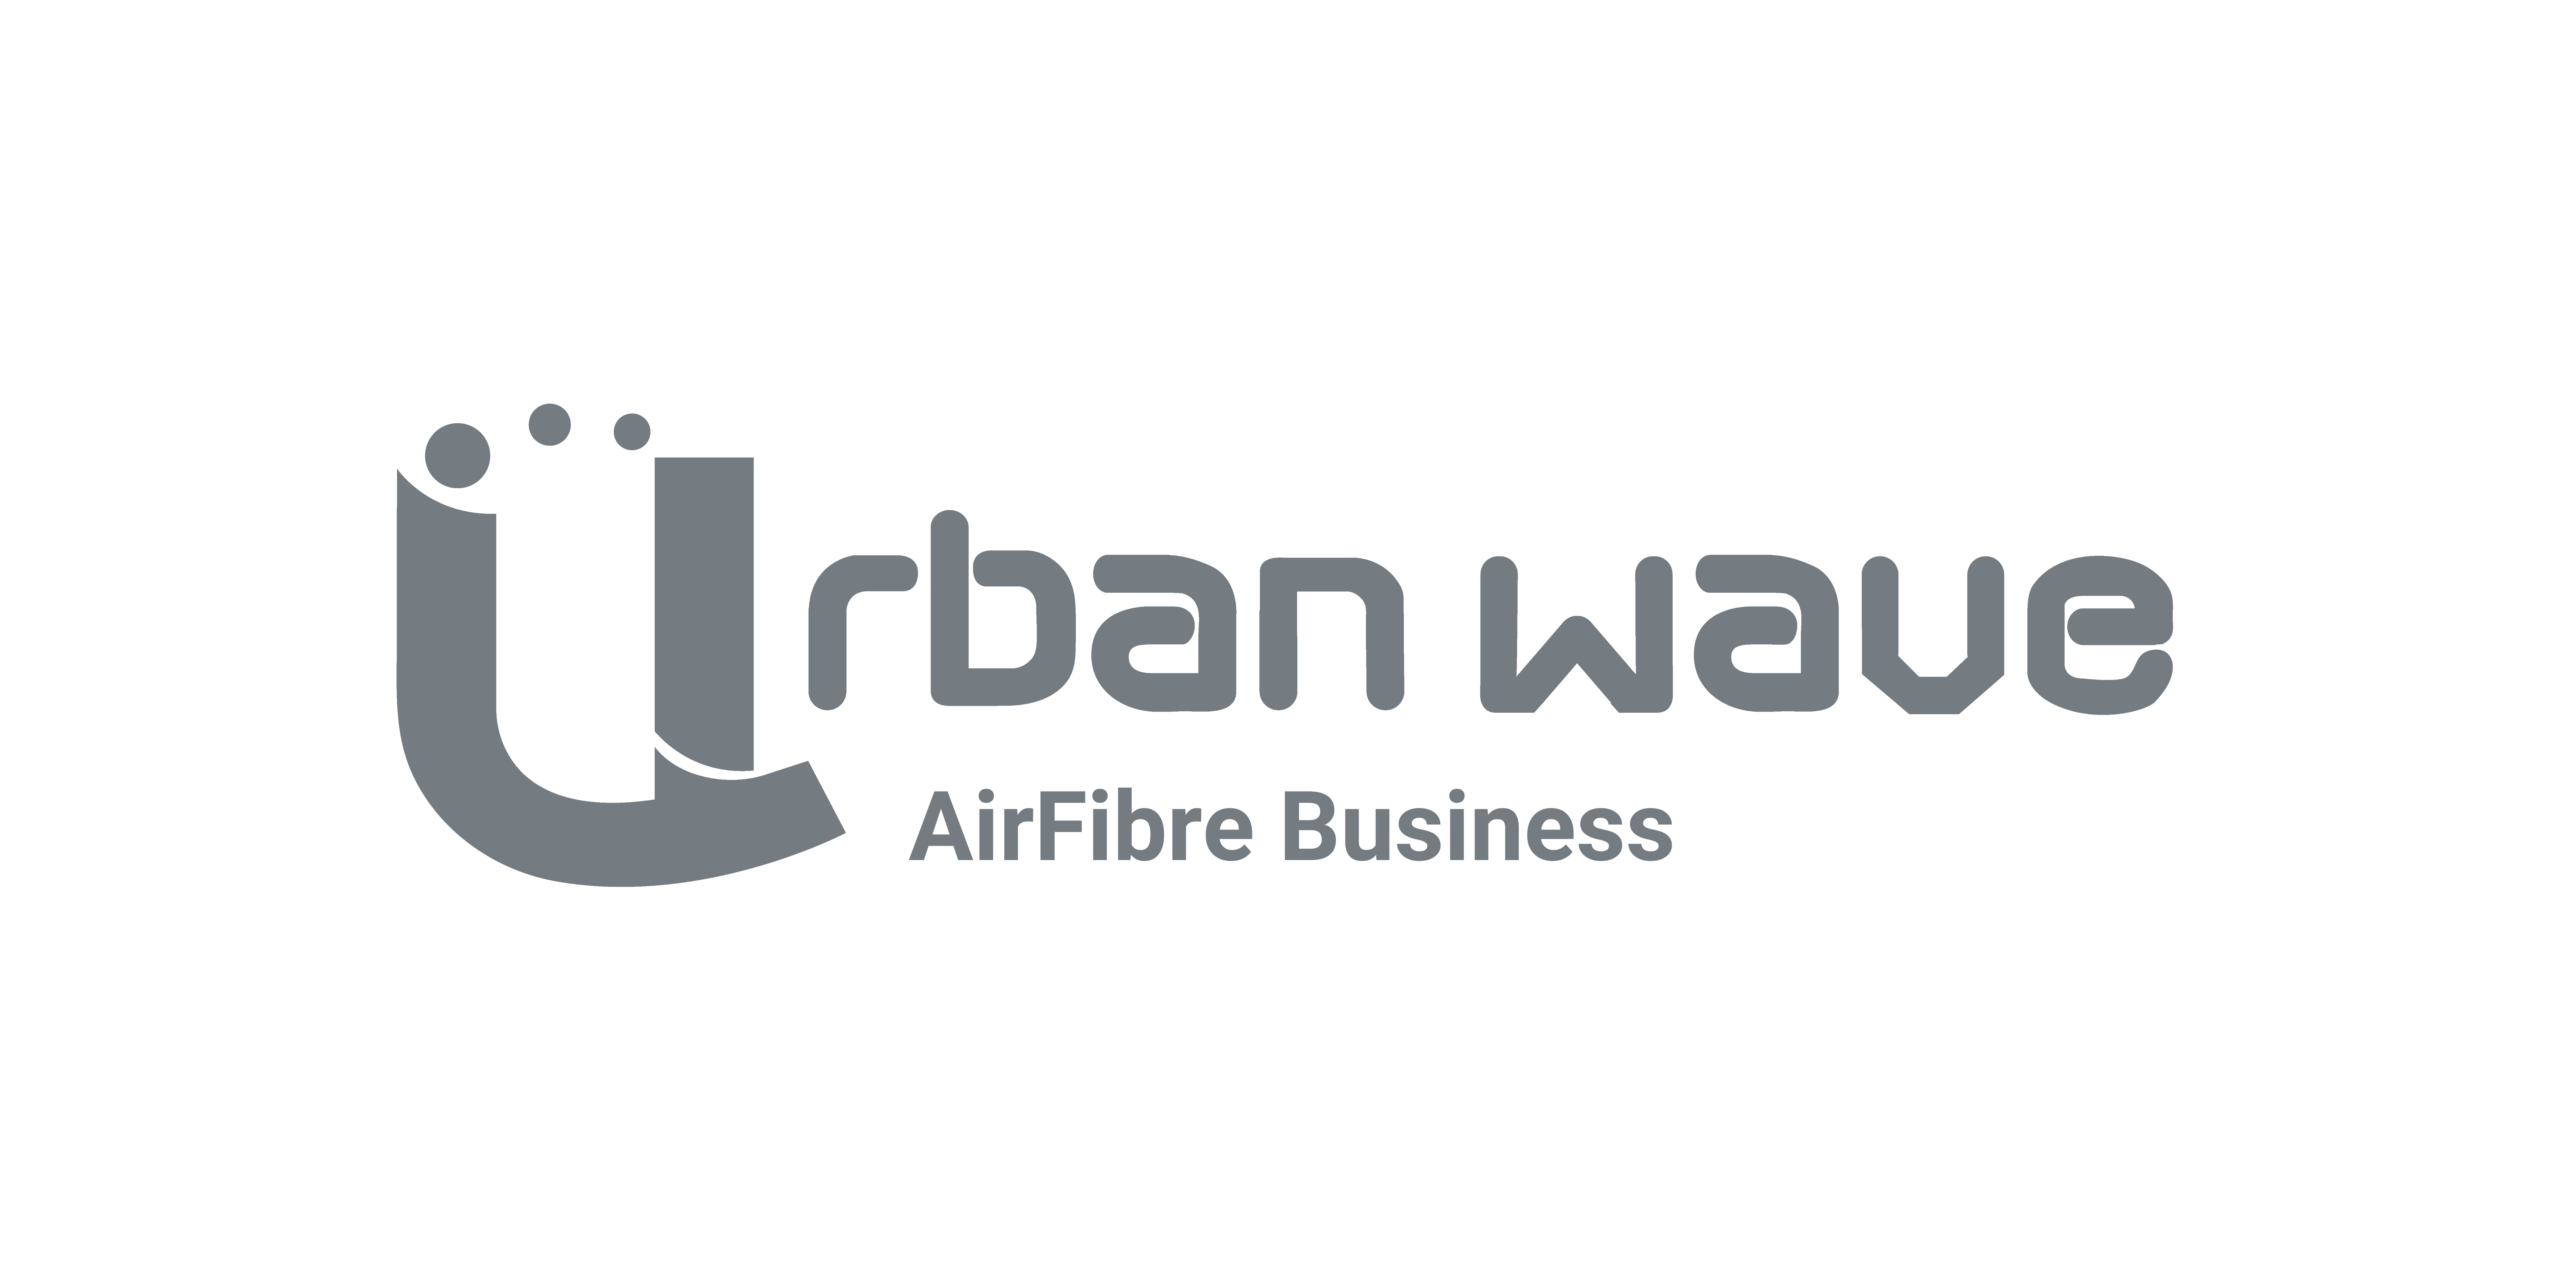 AirFibre Business